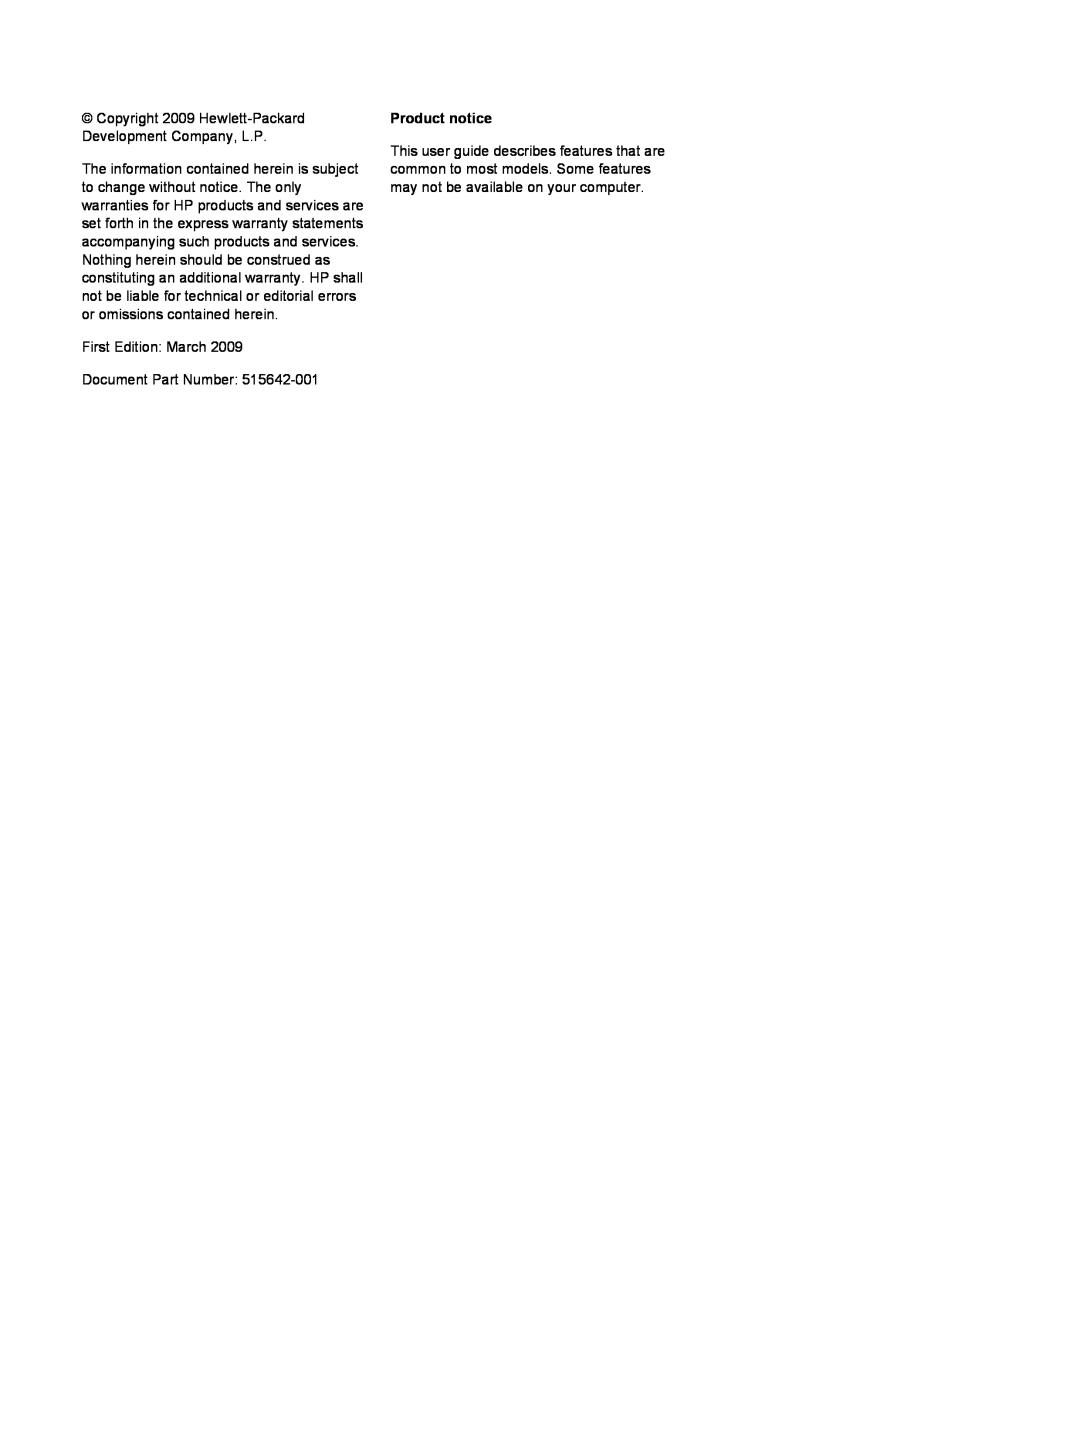 HP CQ61-124TU manual Copyright 2009 Hewlett-Packard Development Company, L.P, First Edition March Document Part Number 